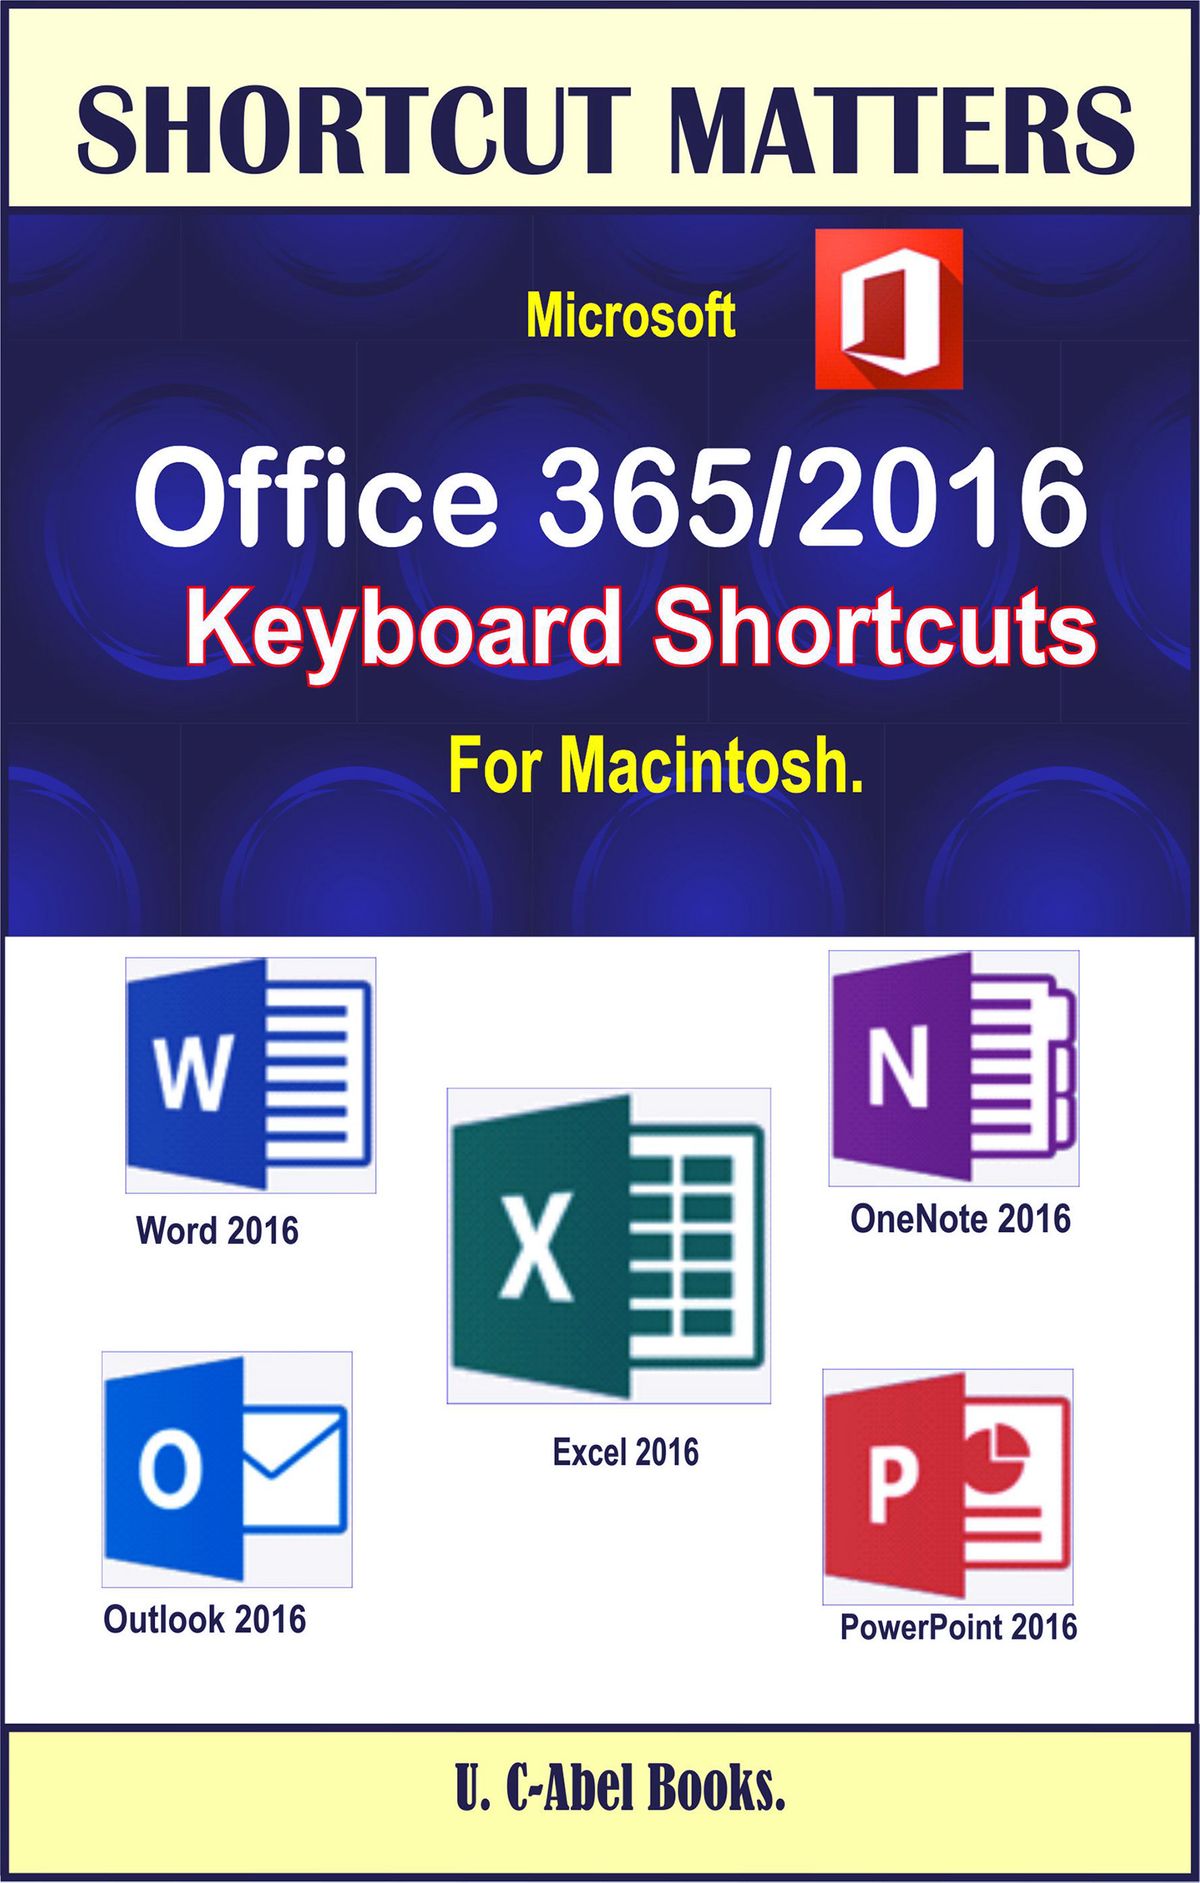 keyboard shortcuts for mac onenote